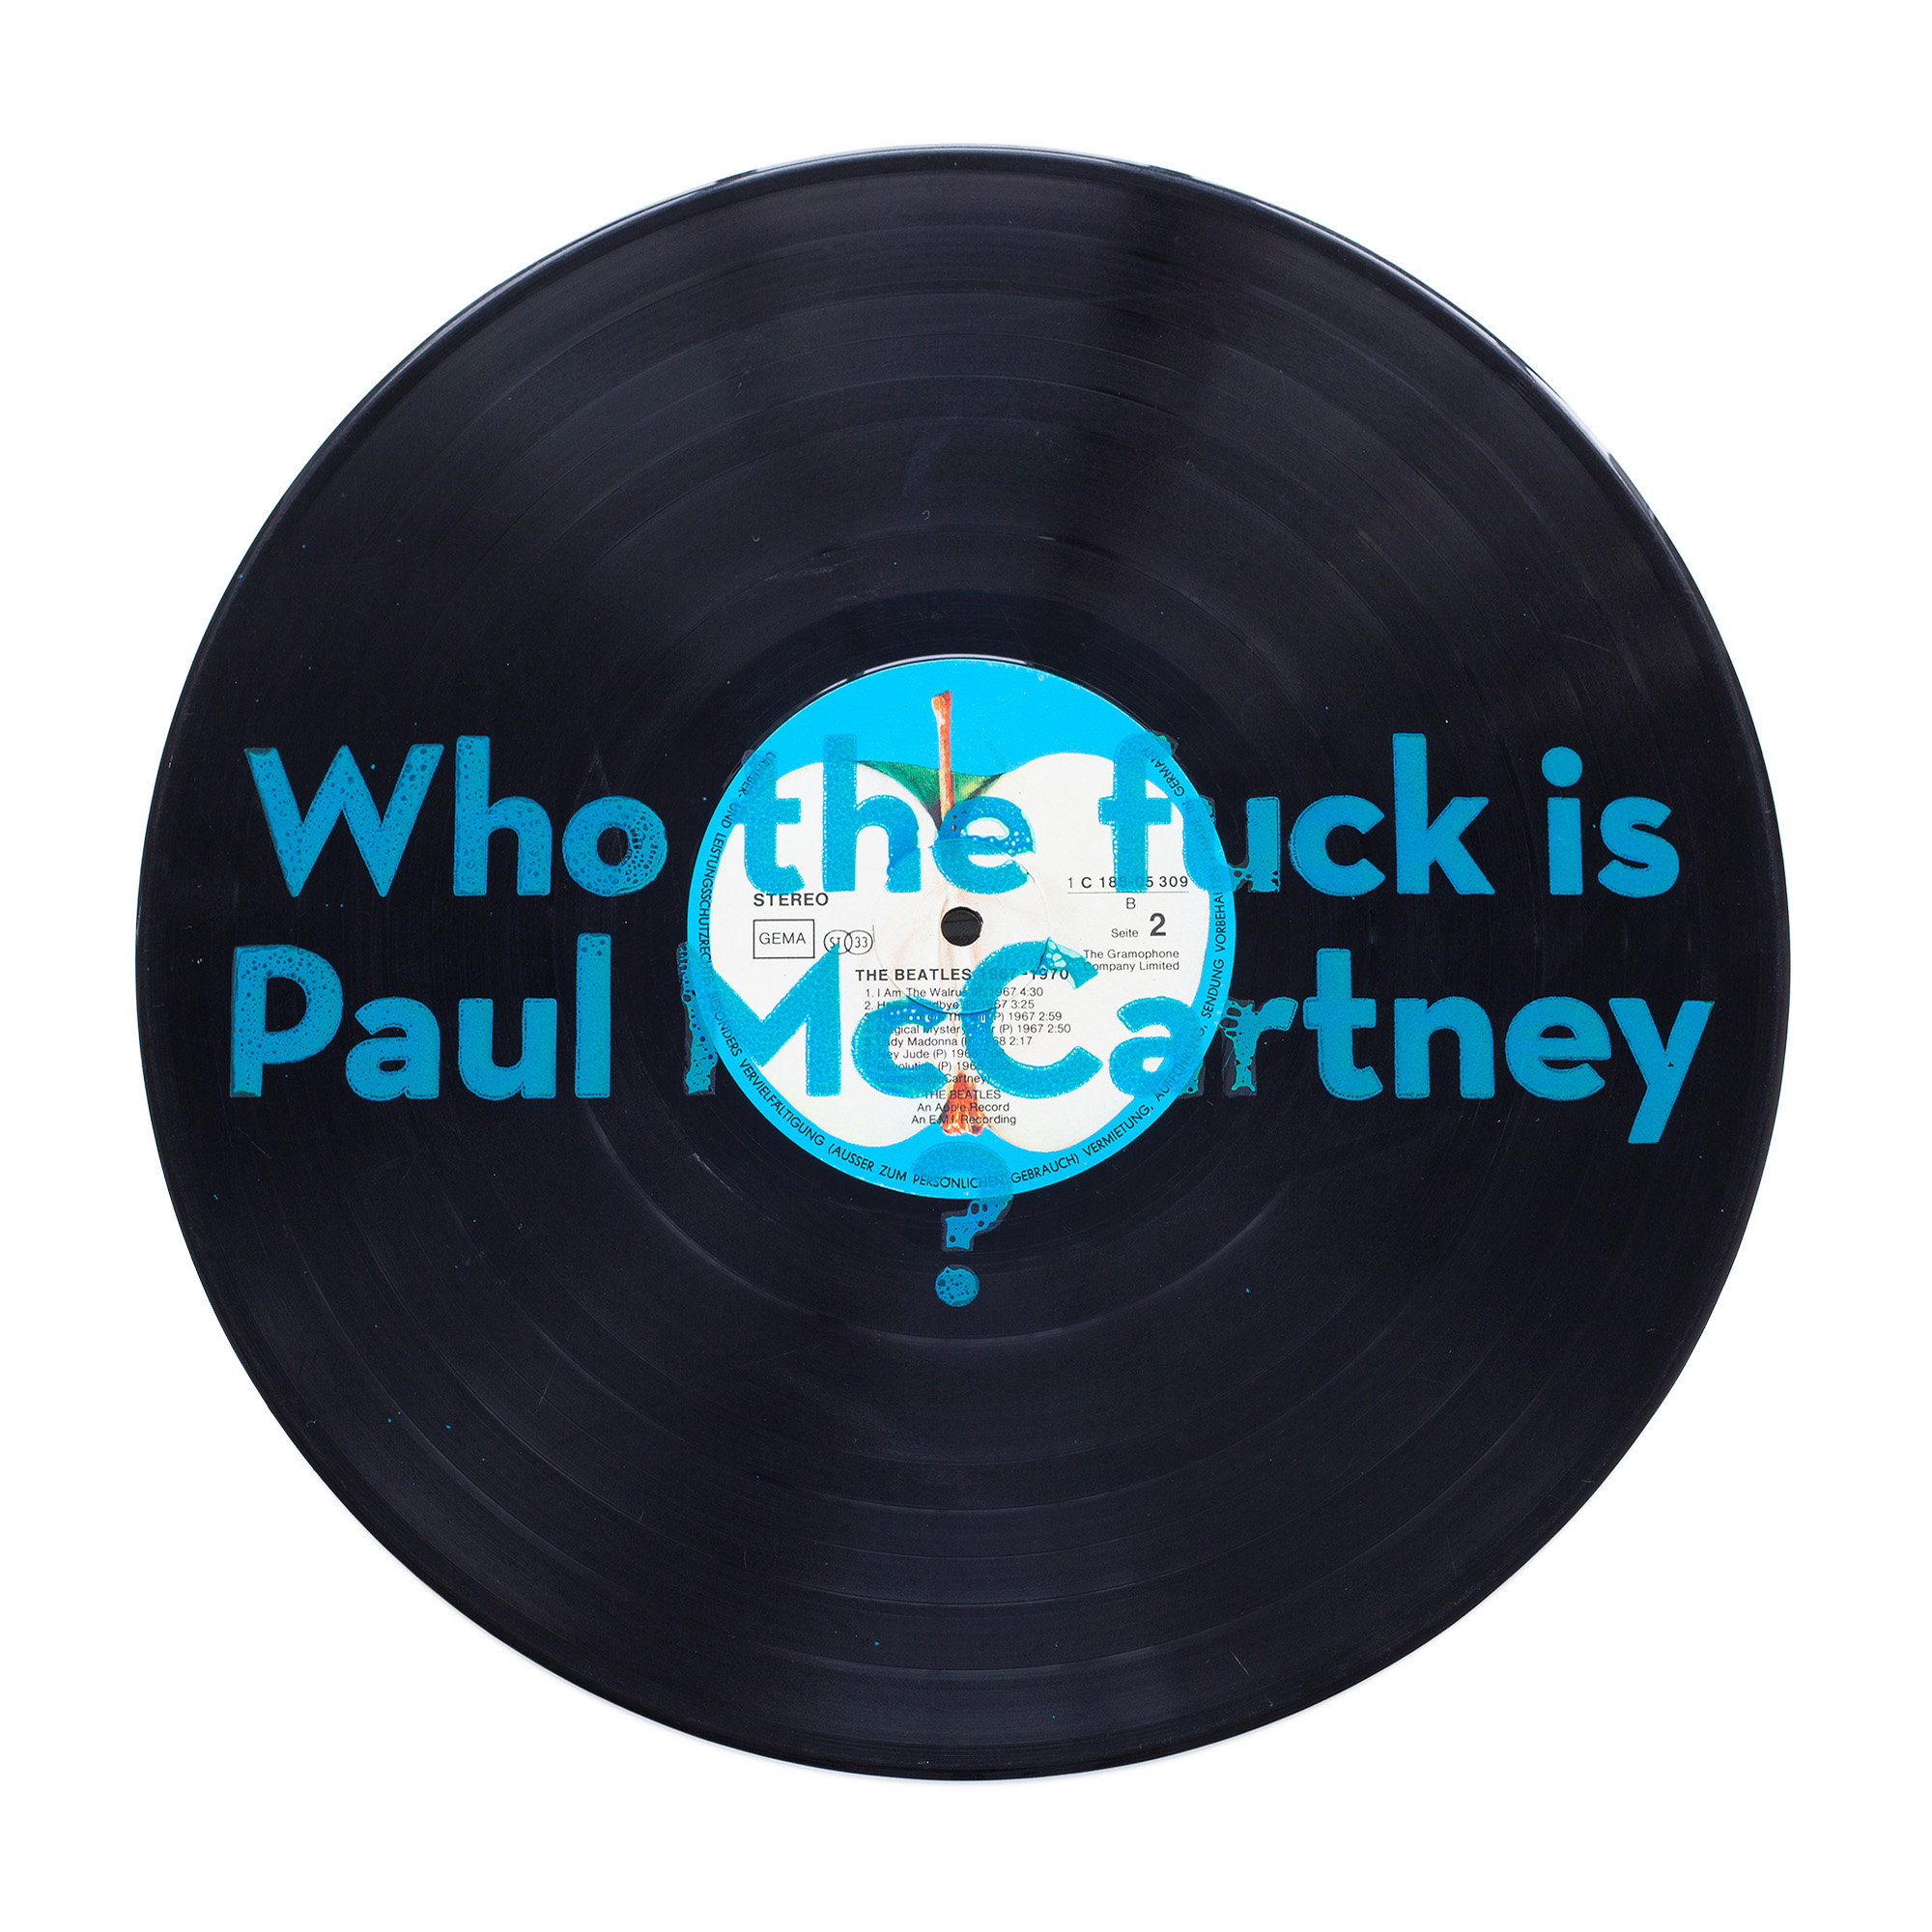 Who the fuck is Paul McCartney